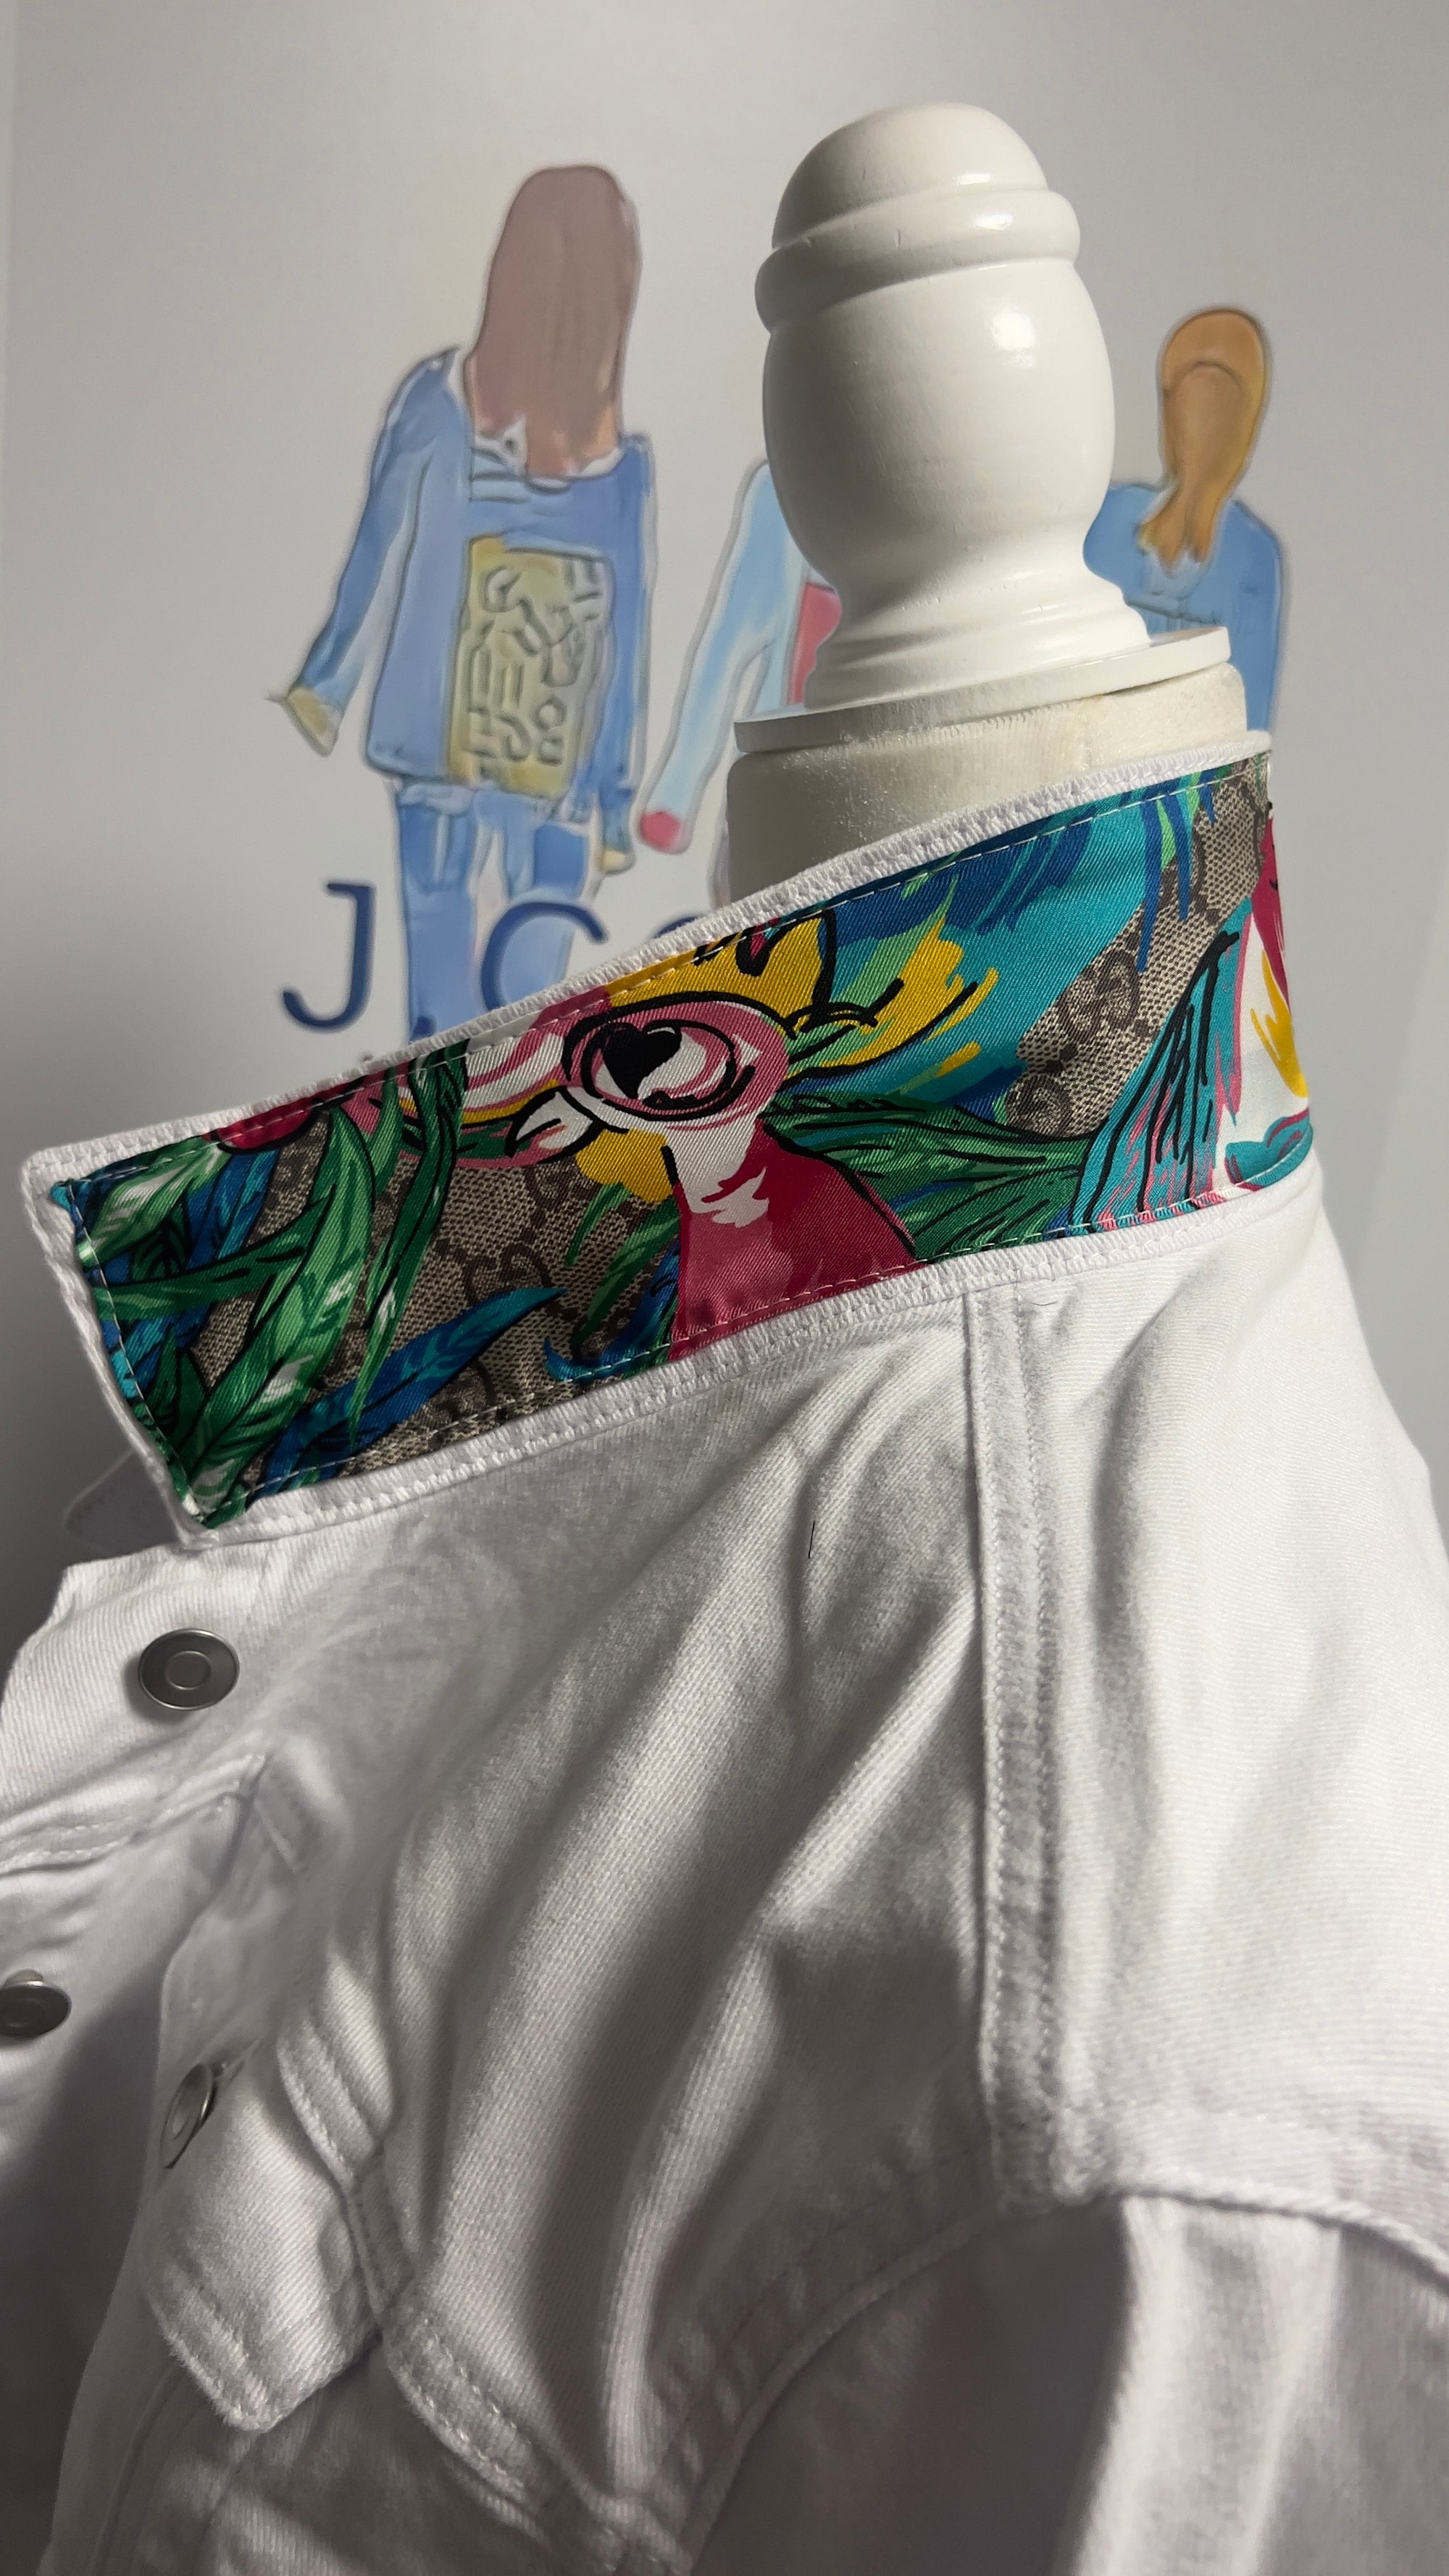 Gucci Rooster Monogram Scarf on Denim Jacket